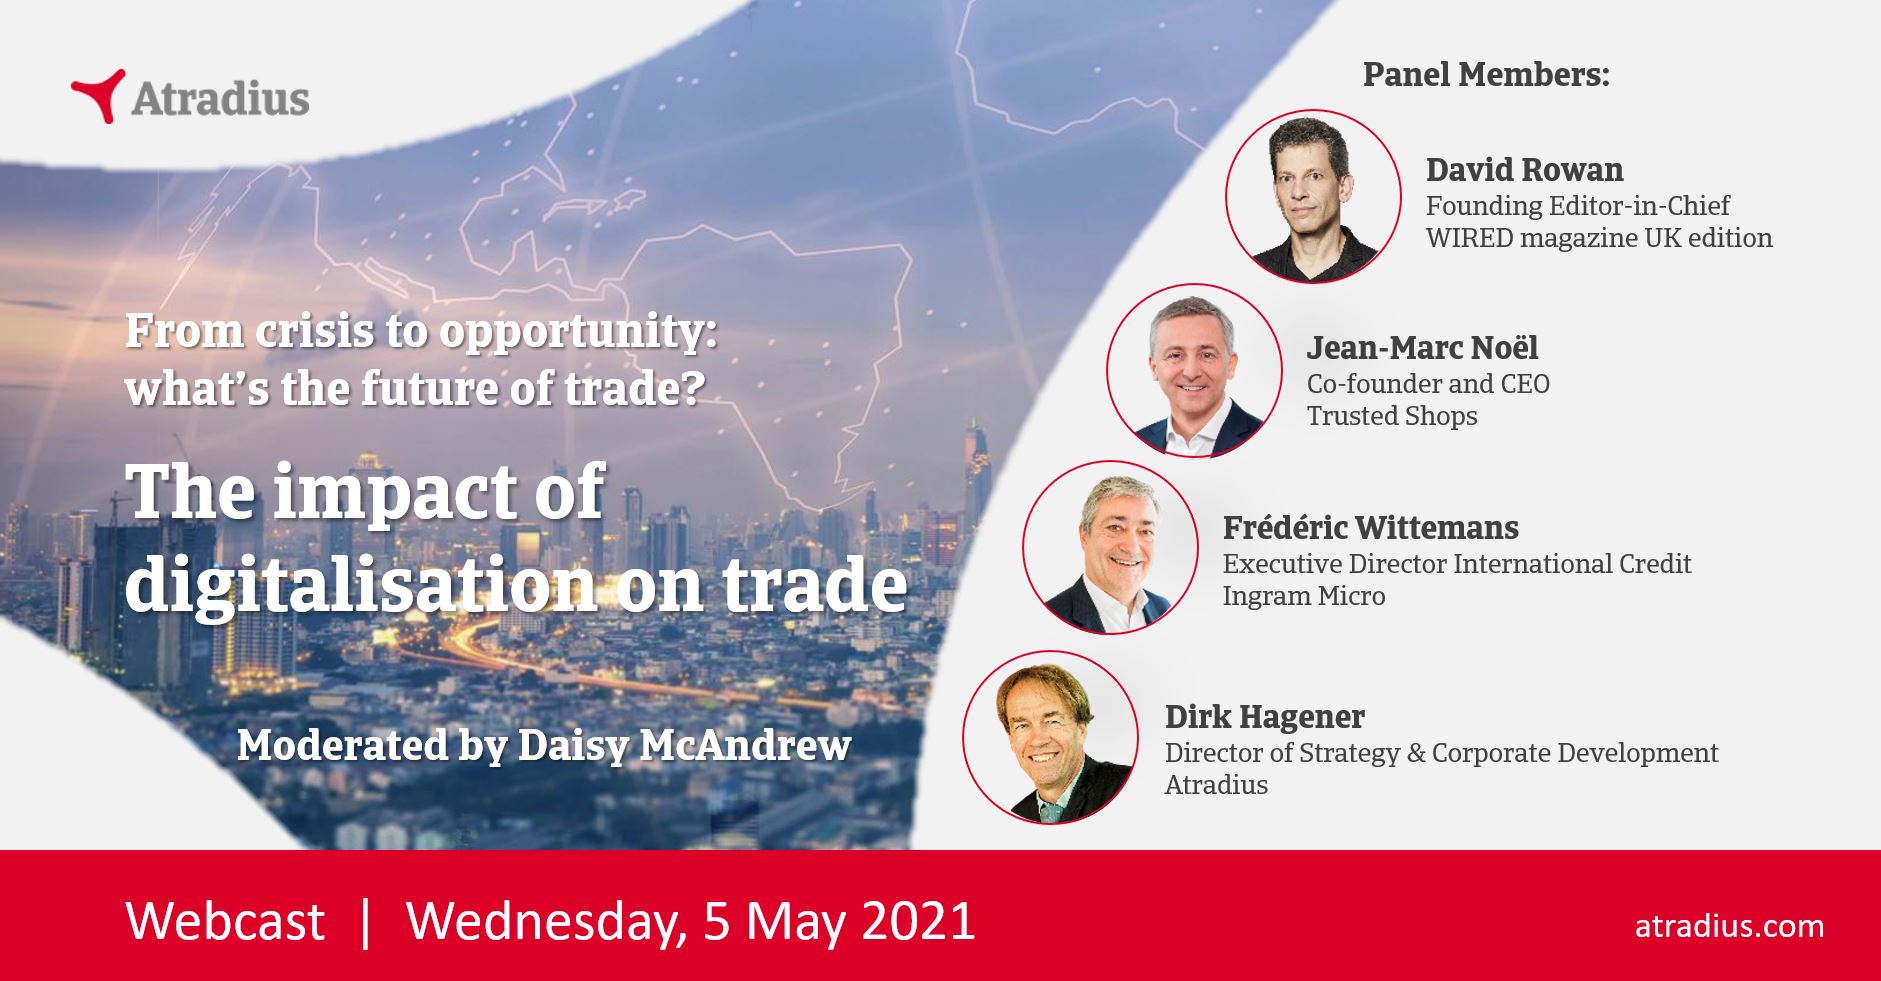 Webinar Atradius Event 3: The impact of digitalisation on trade